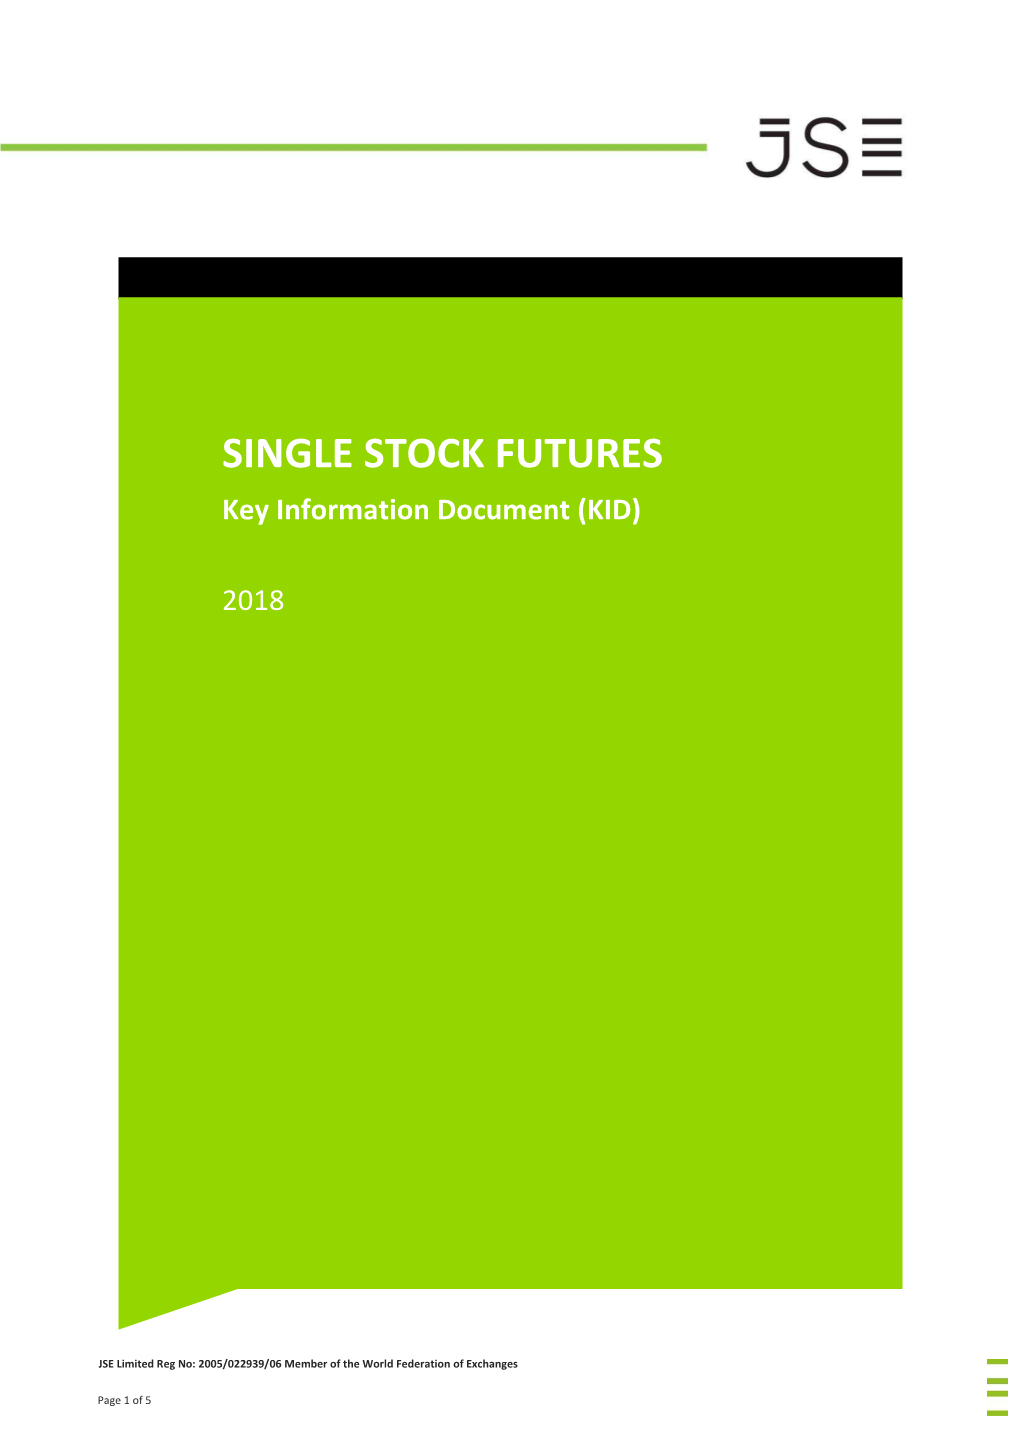 JSE KID Single Stock Futures